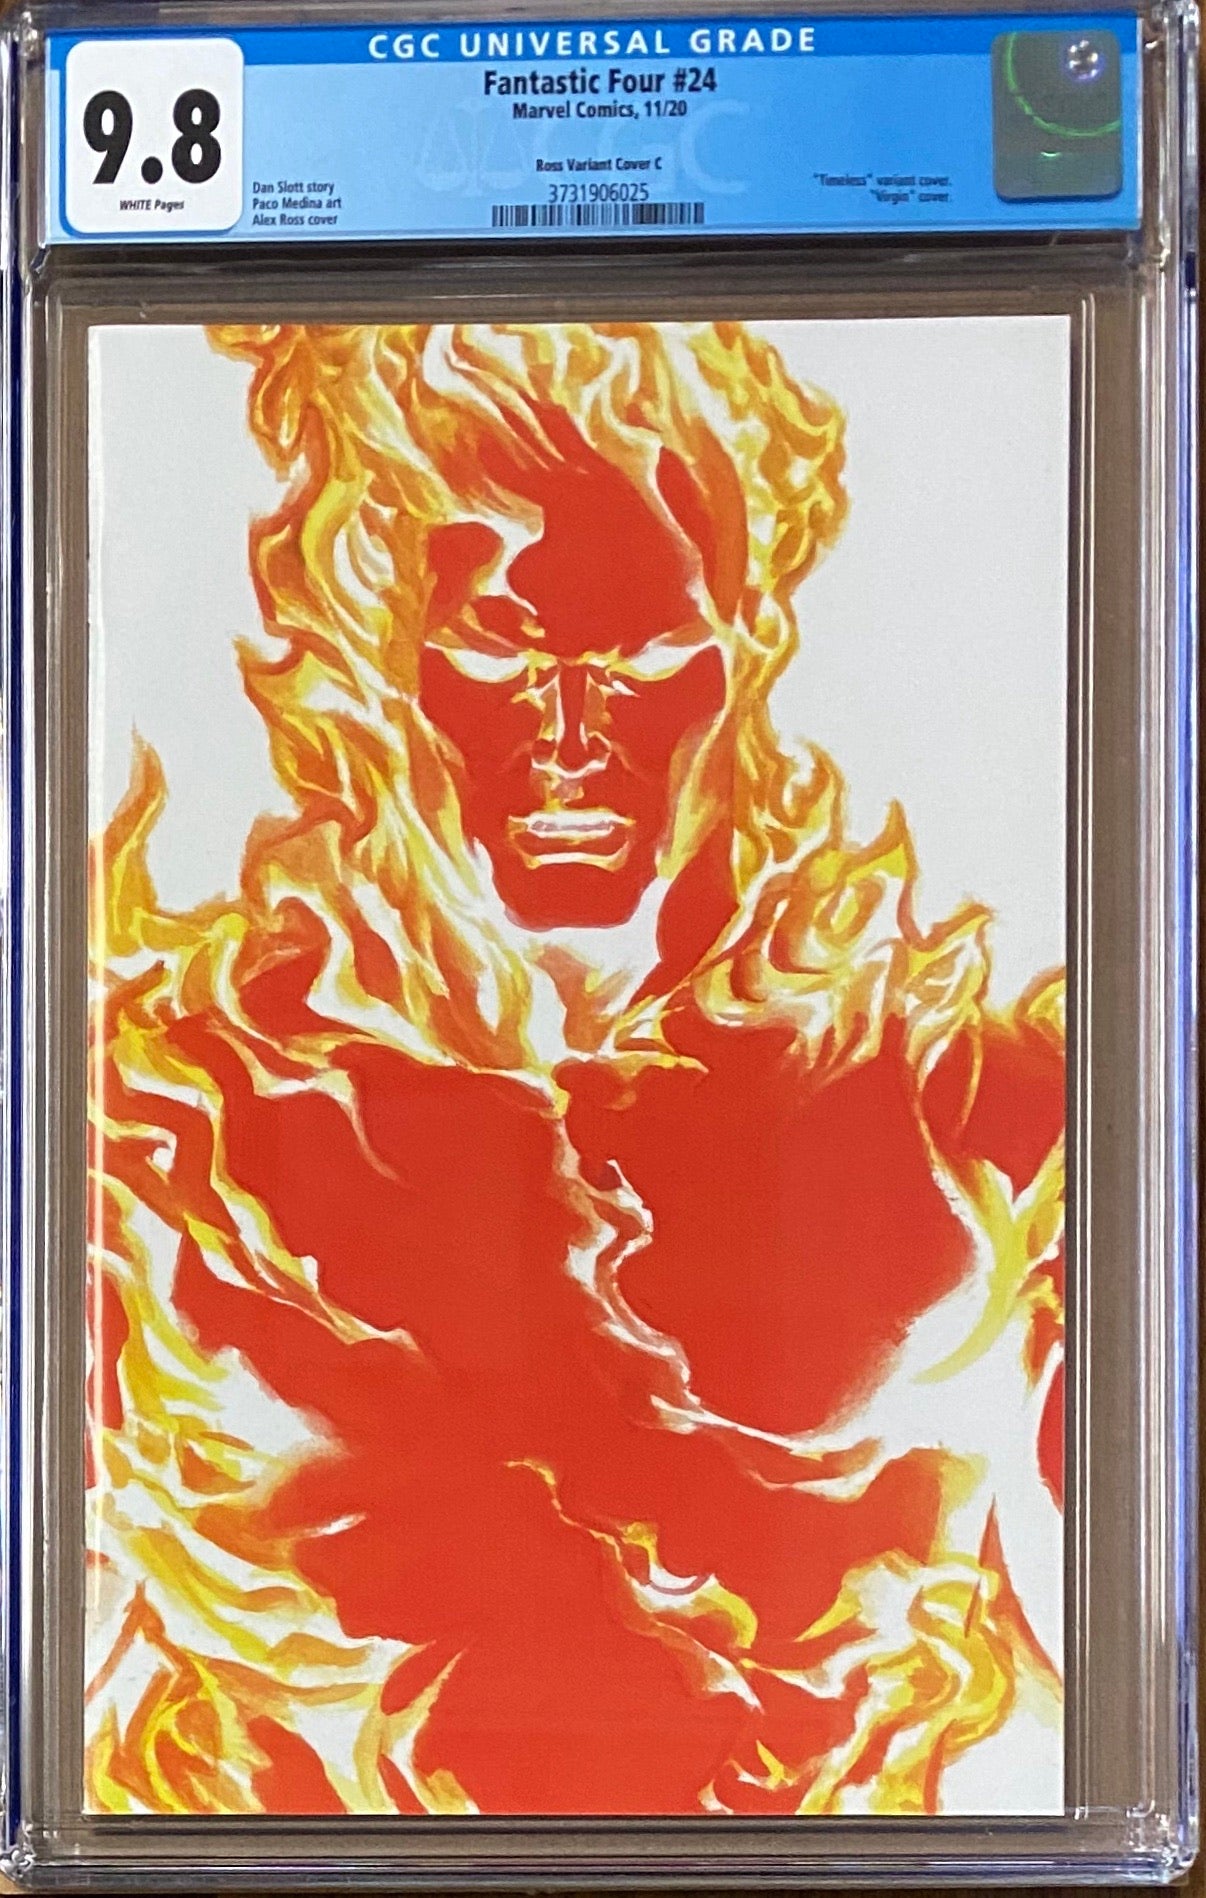 Fantastic Four #24 Alex Ross Human Torch "Timeless" Variant CGC 9.8